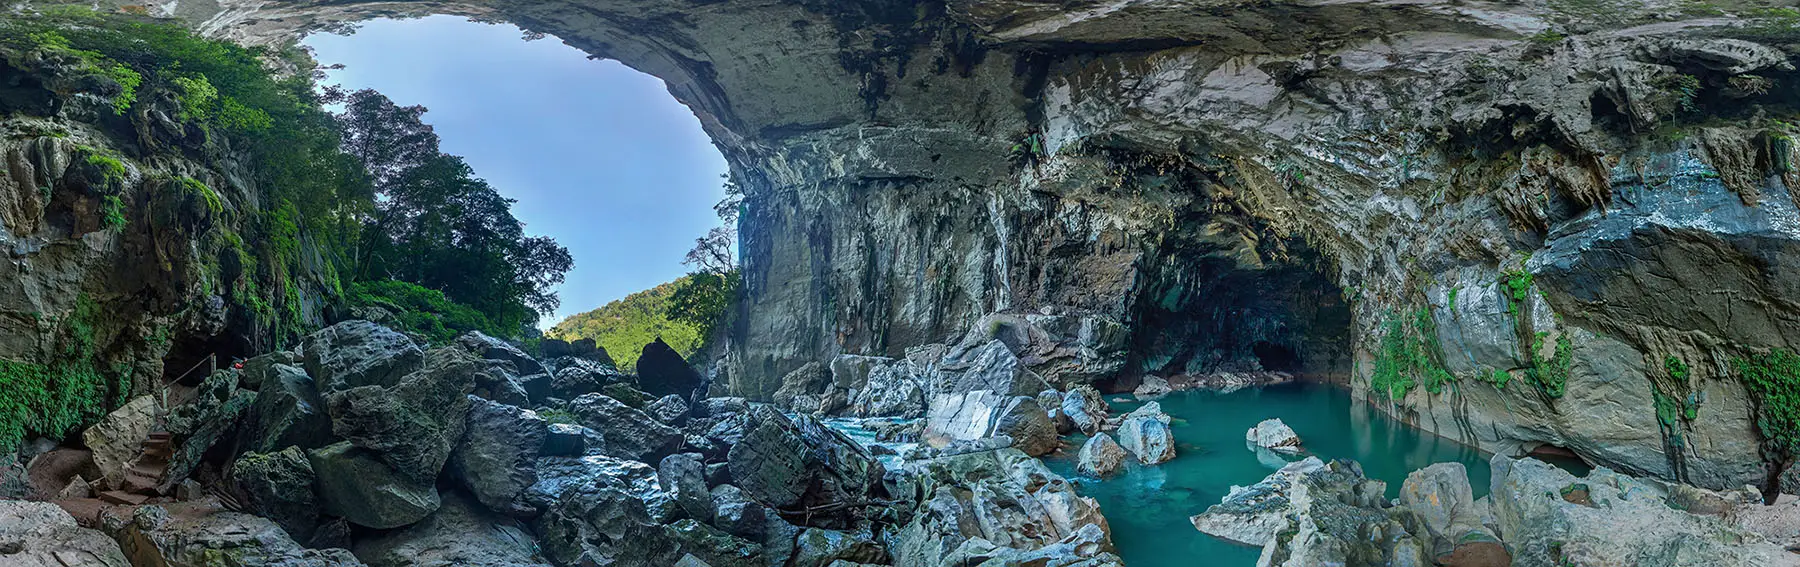 Xe Bangfai Cave header